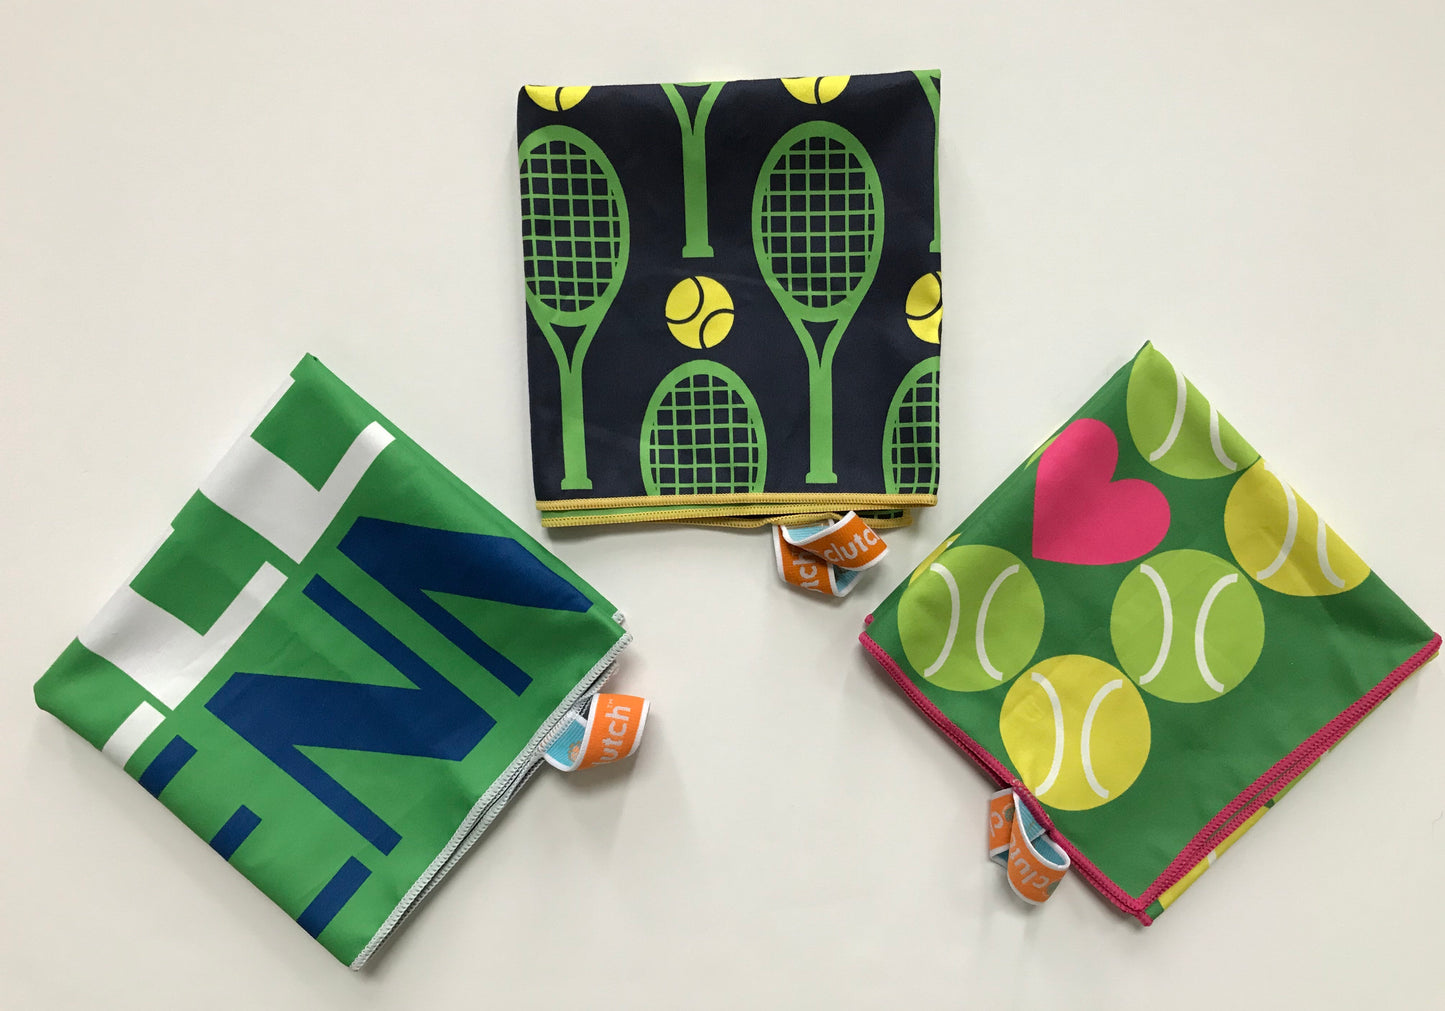 Tennis Racquets on Blue Tennis Towel